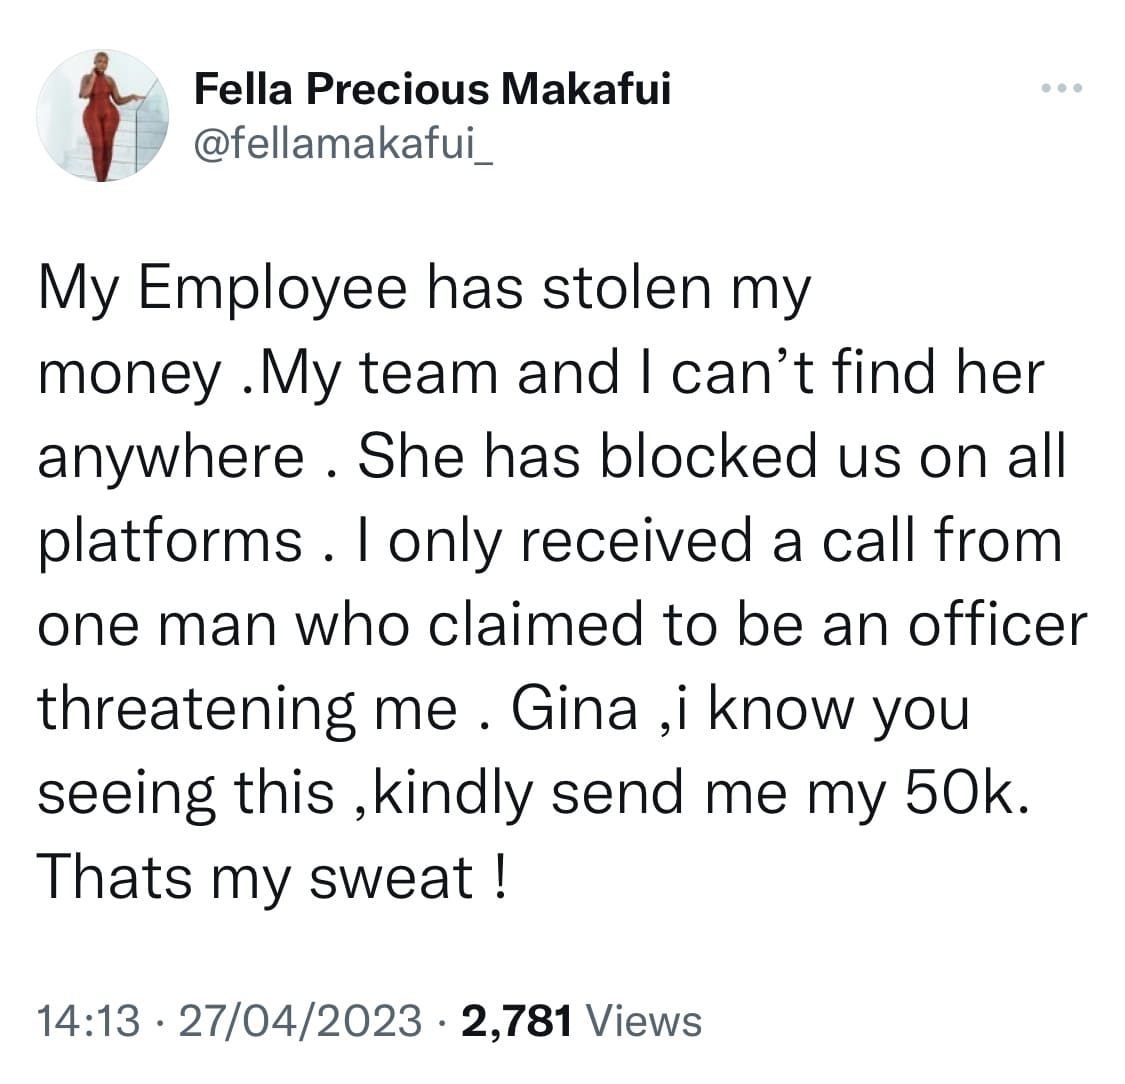 Fella Makafui robbed by employee